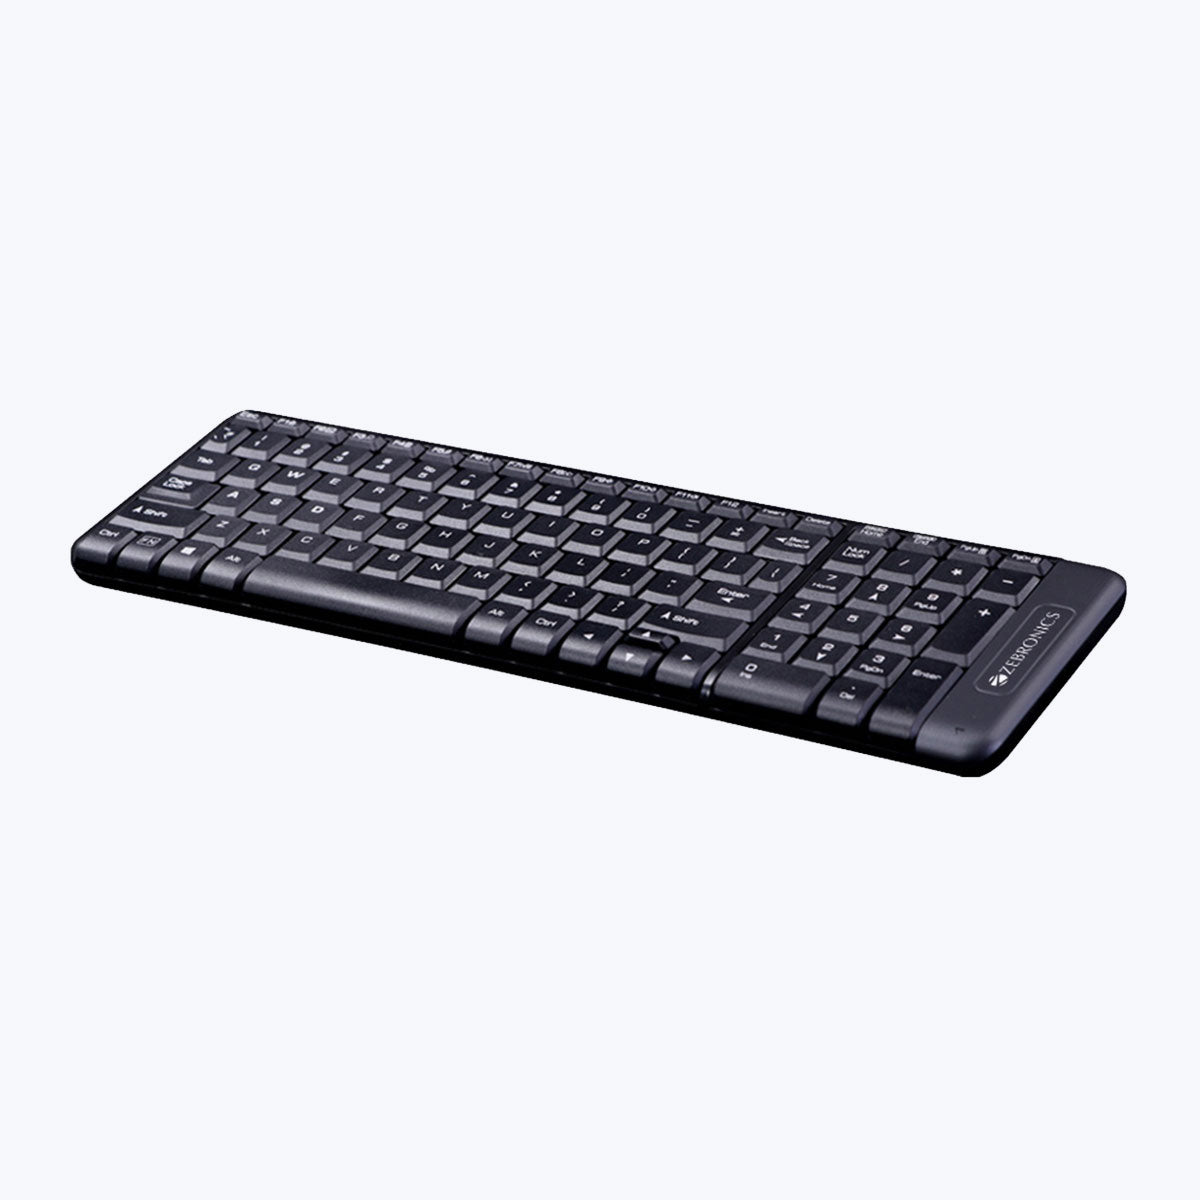 Zeb-Companion 104 - Wireless Keyboard and Mouse Combo - Zebronics